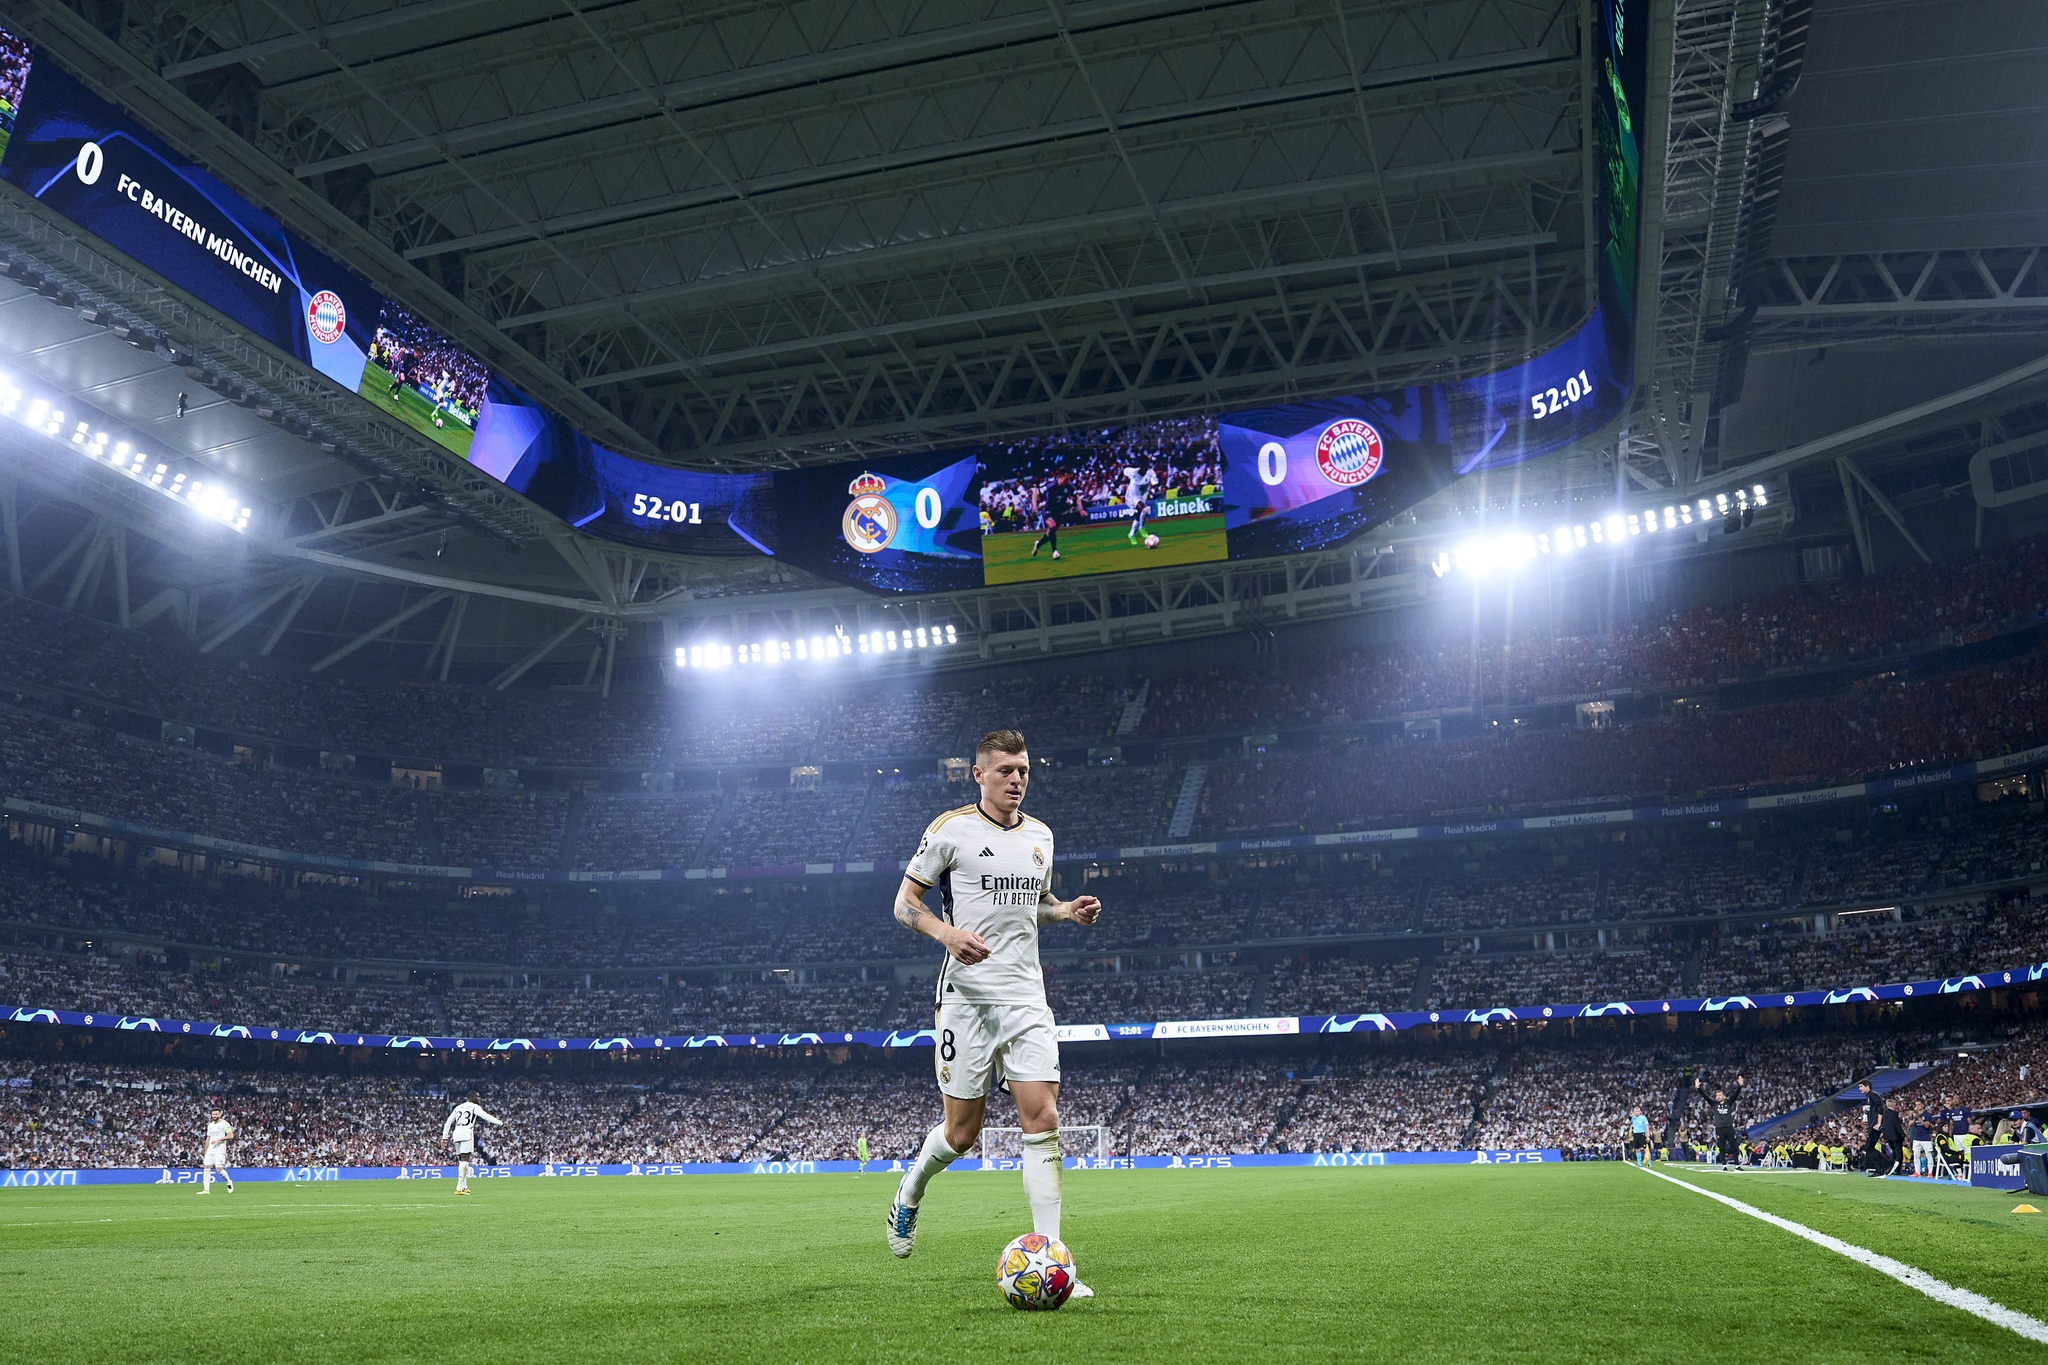 C�mo afrontar� mentalmente el Real Madrid la final de la Champions seg�n un experto: Se juegan mucho